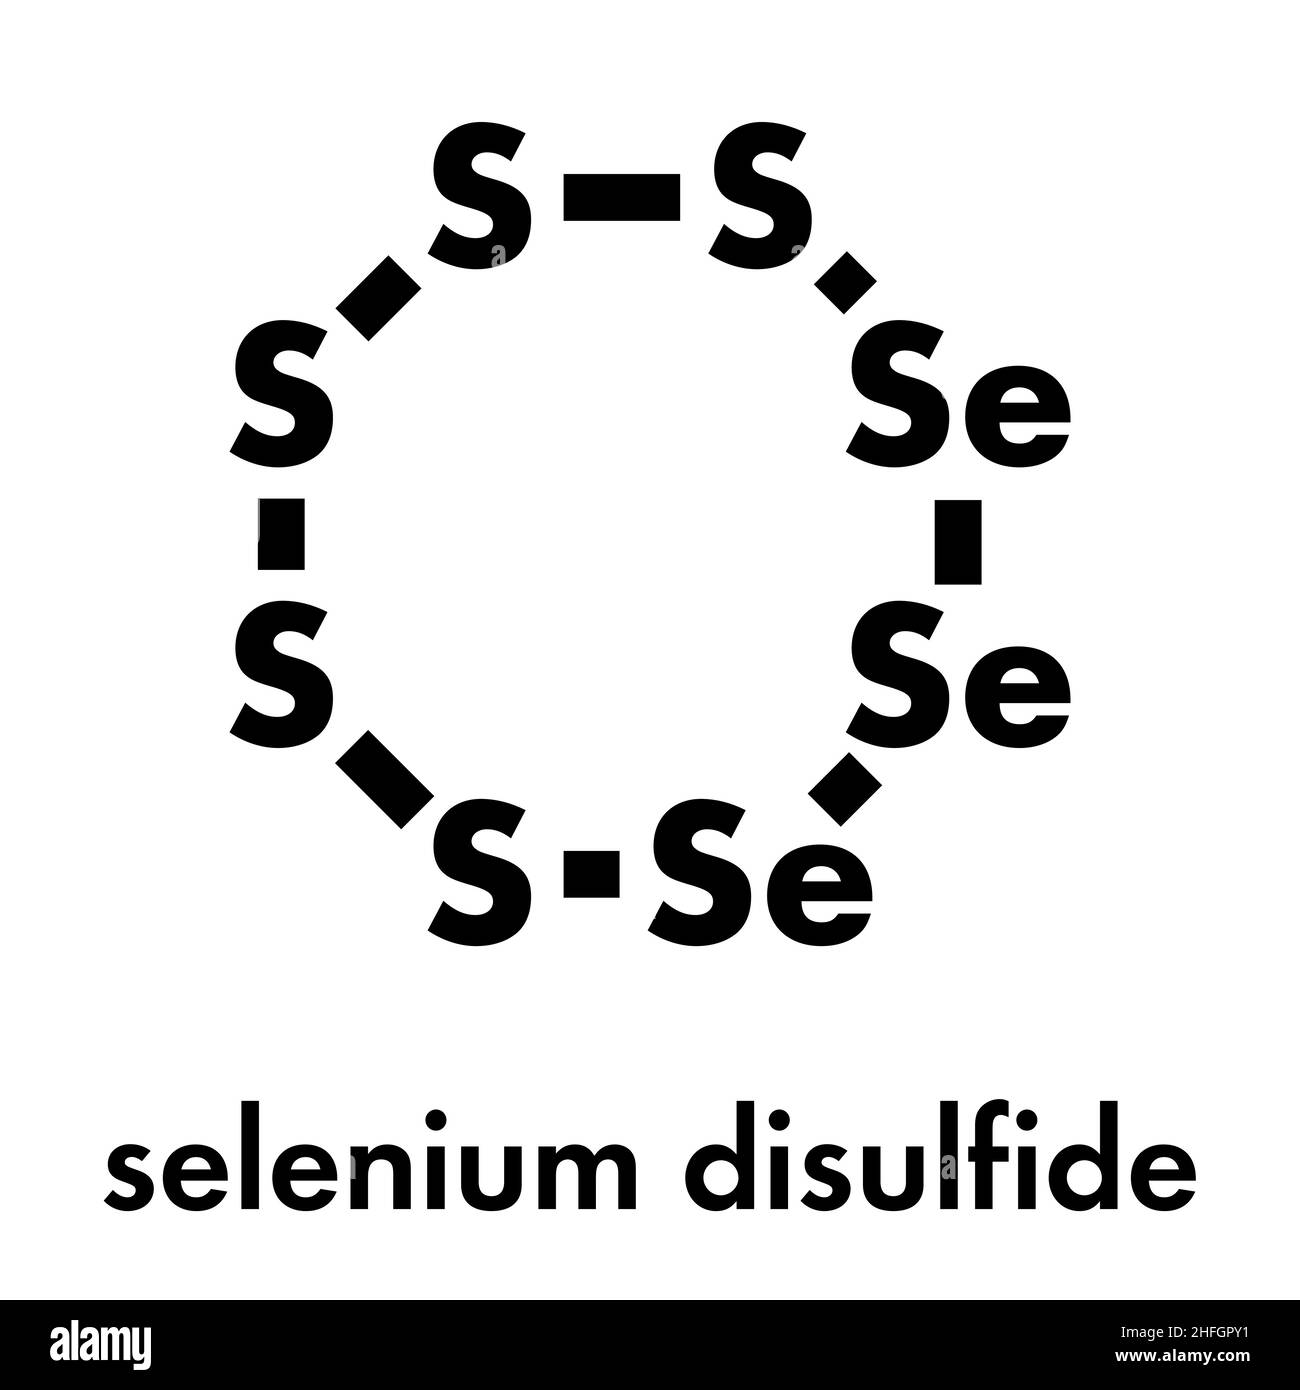 Selenium disulfide dandruff shampoo active ingredient molecule. Selenium sulfide has antifungal properties. Skeletal formula. Stock Vector